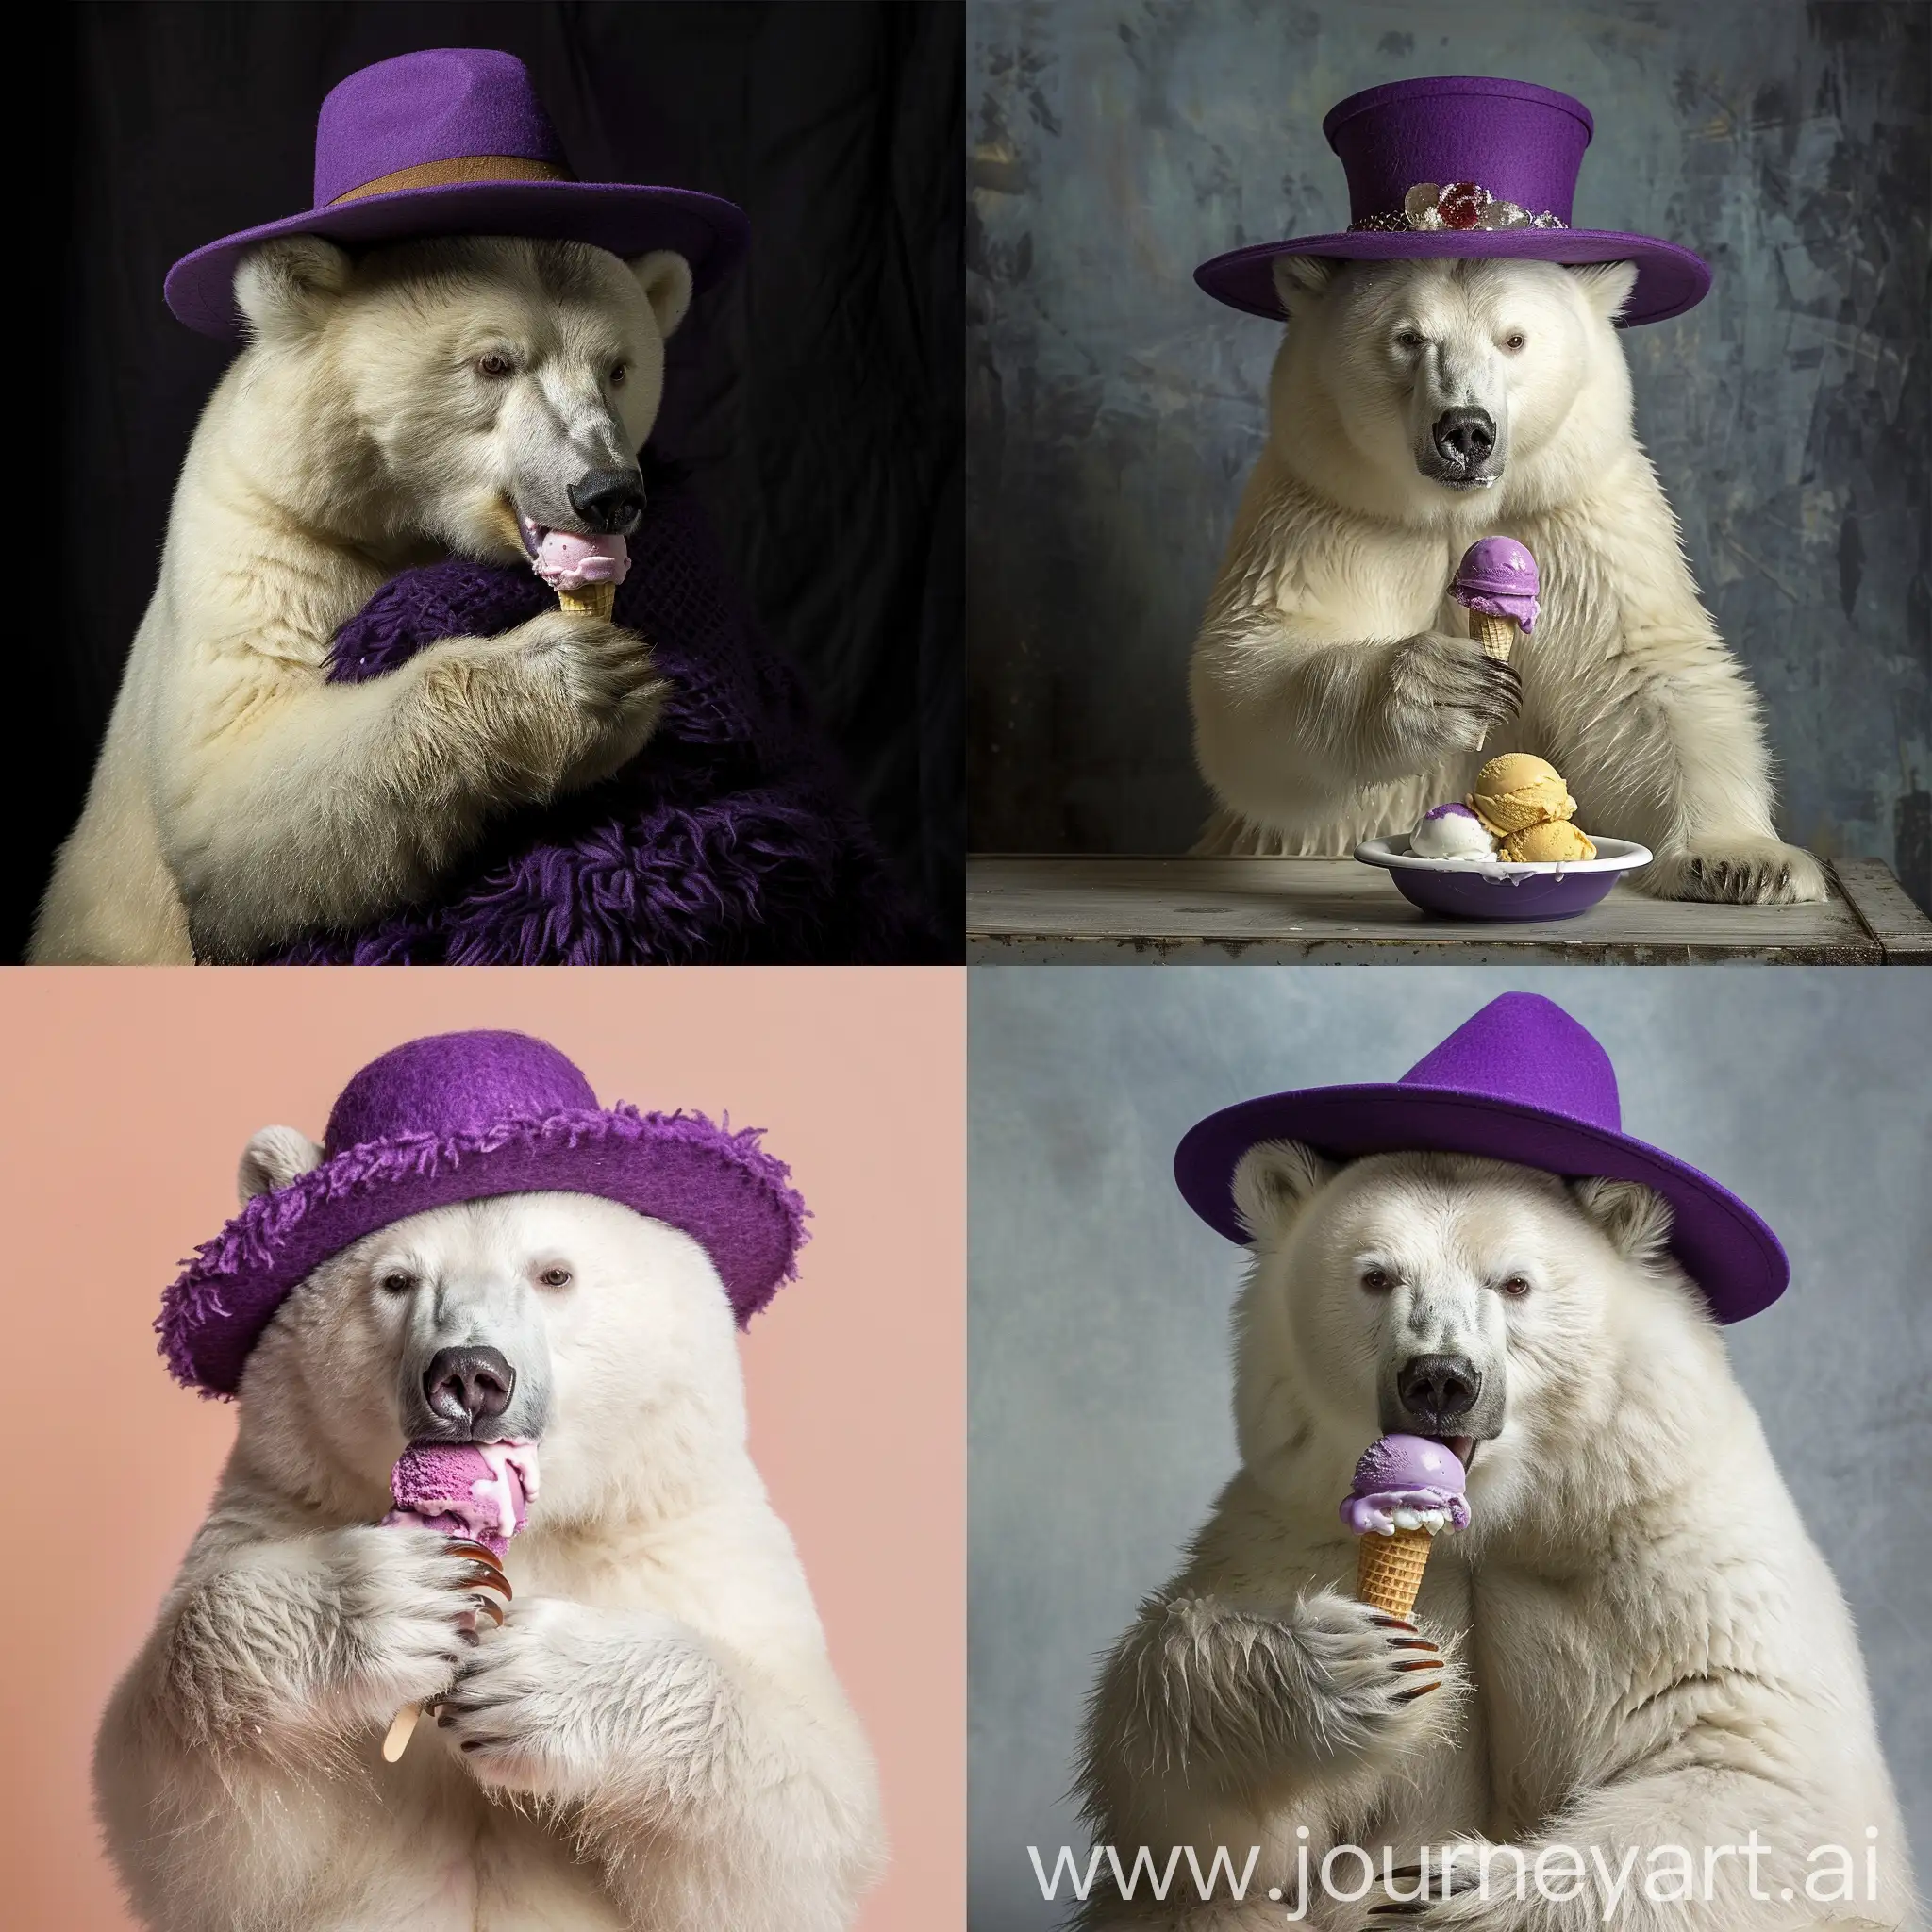 White bear eating ice cream in purple hat